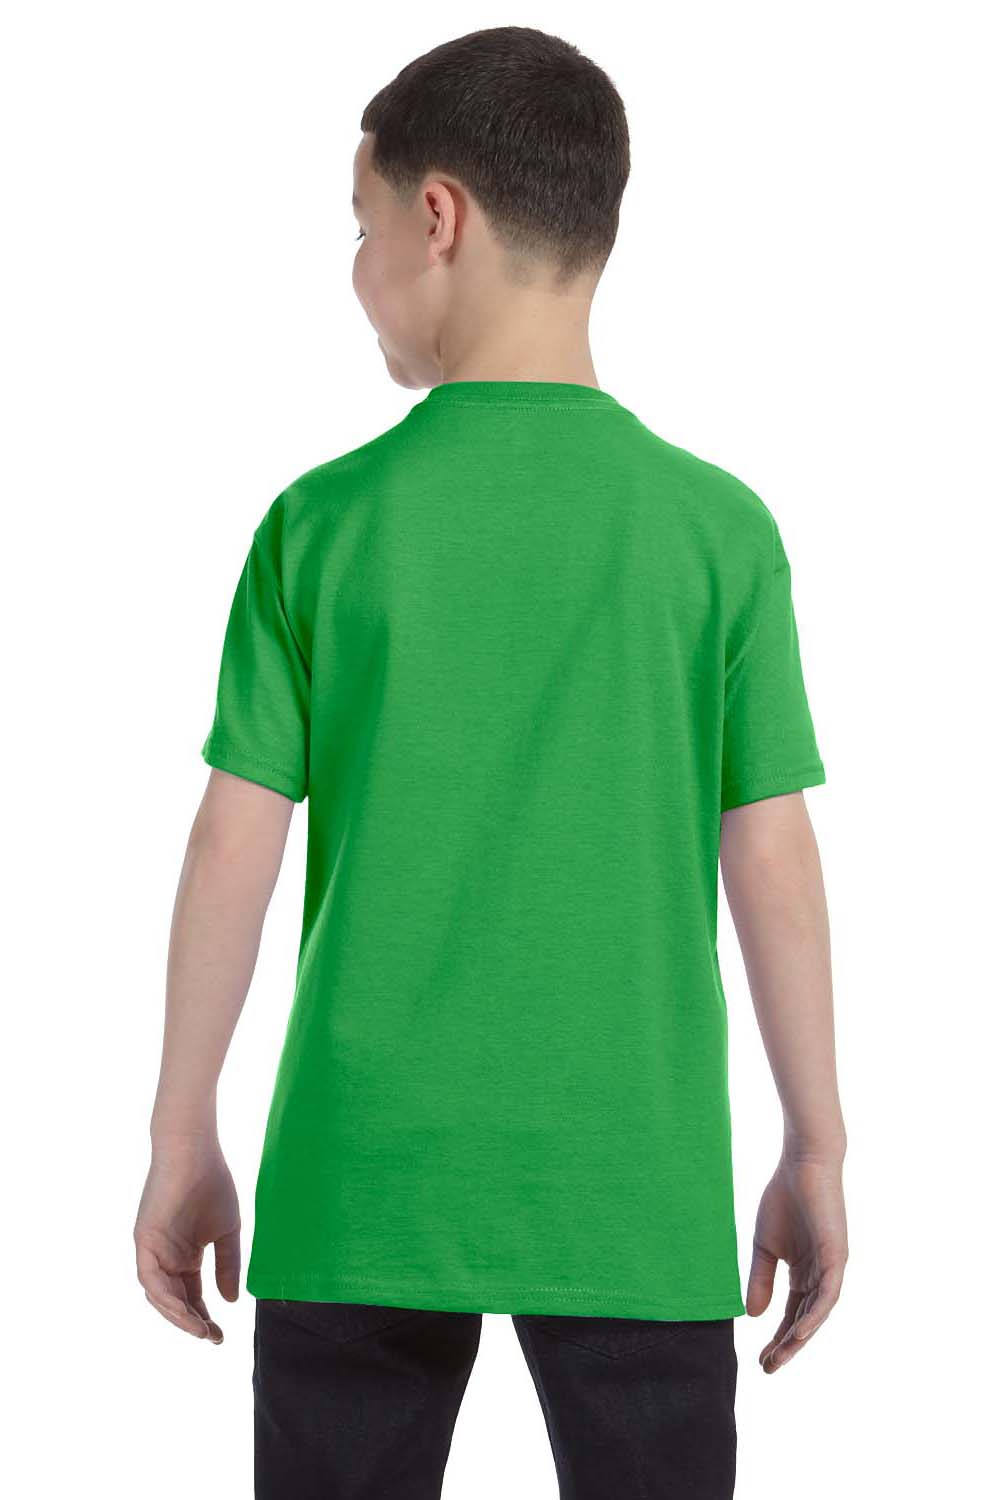 Hanes 54500 Youth ComfortSoft Short Sleeve Crewneck T-Shirt Shamrock Green Back